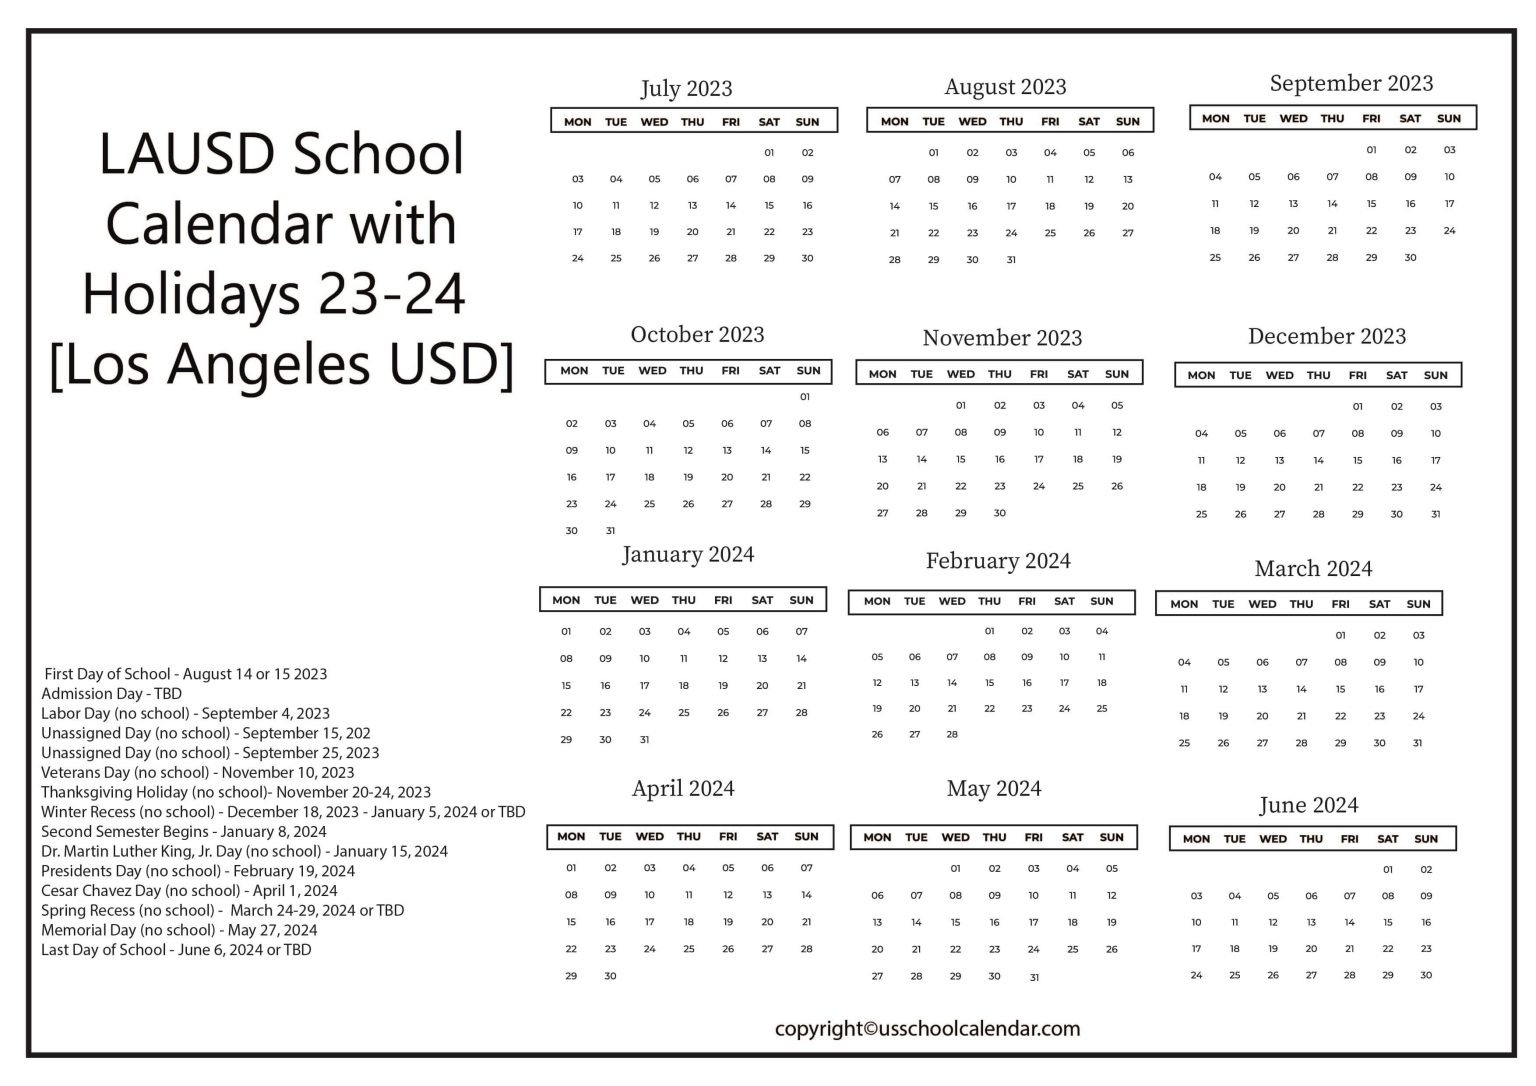 LAUSD School Calendar with Holidays 2324 [Los Angeles USD]